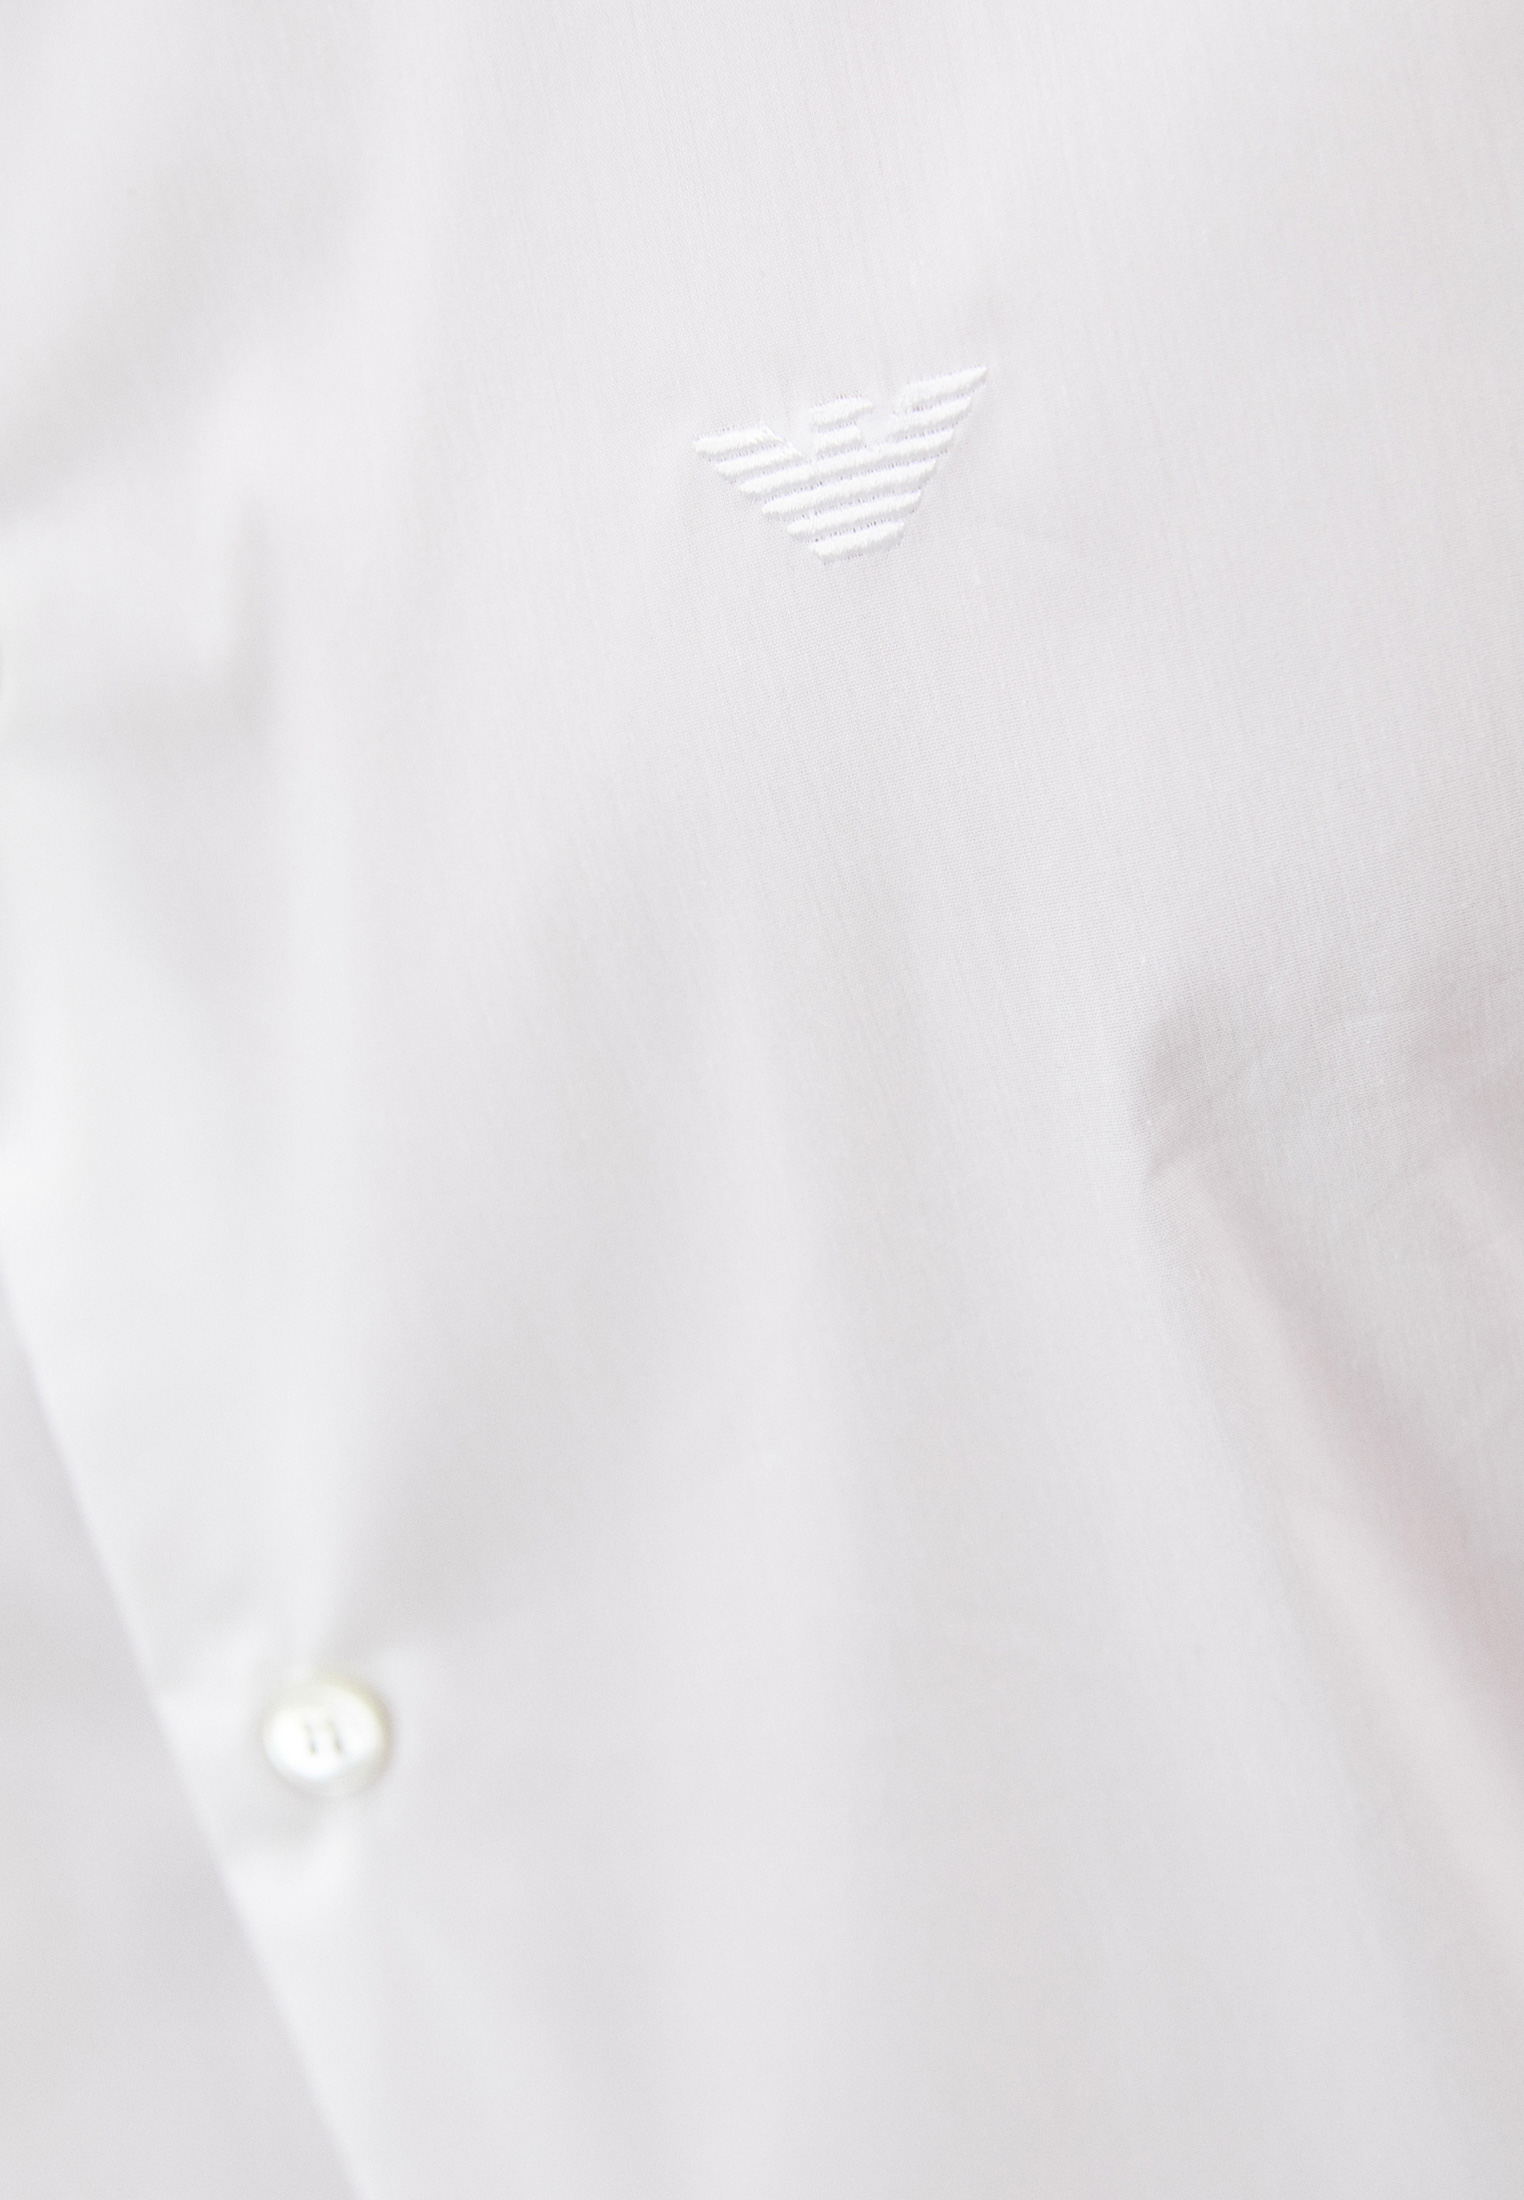 Рубашка с длинным рукавом Emporio Armani (Эмпорио Армани) 8N1C09 1NI9Z: изображение 6